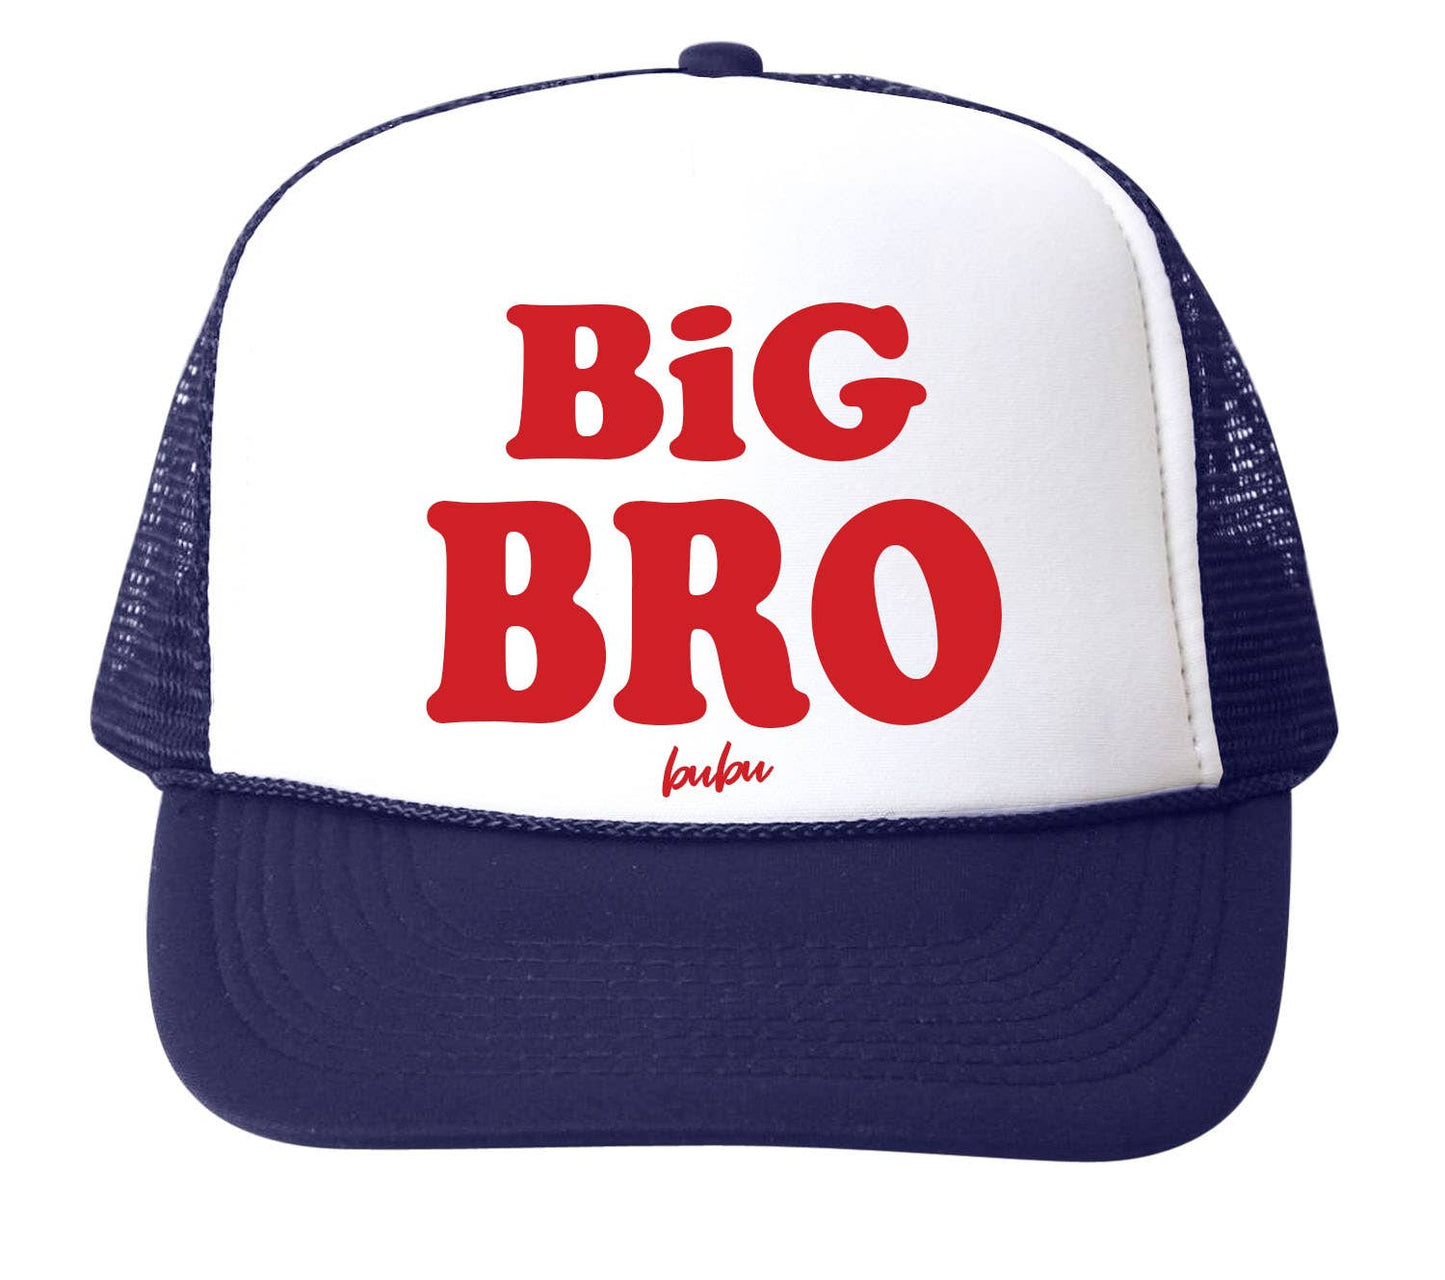 Bubu big bro trucker hat